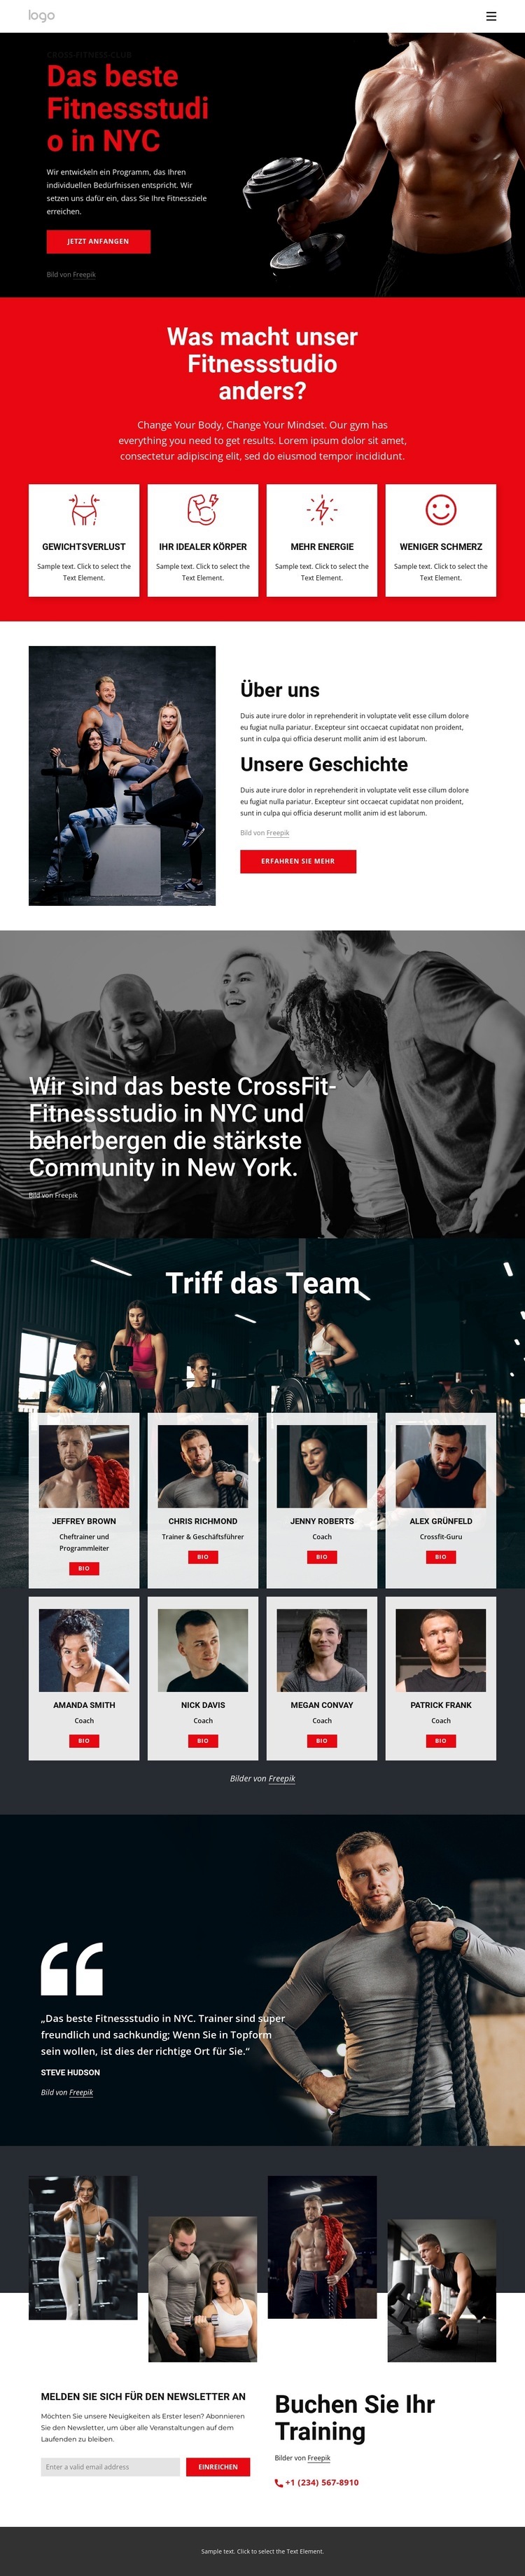 Das beste Crossfit-Fitnessstudio Vorlage